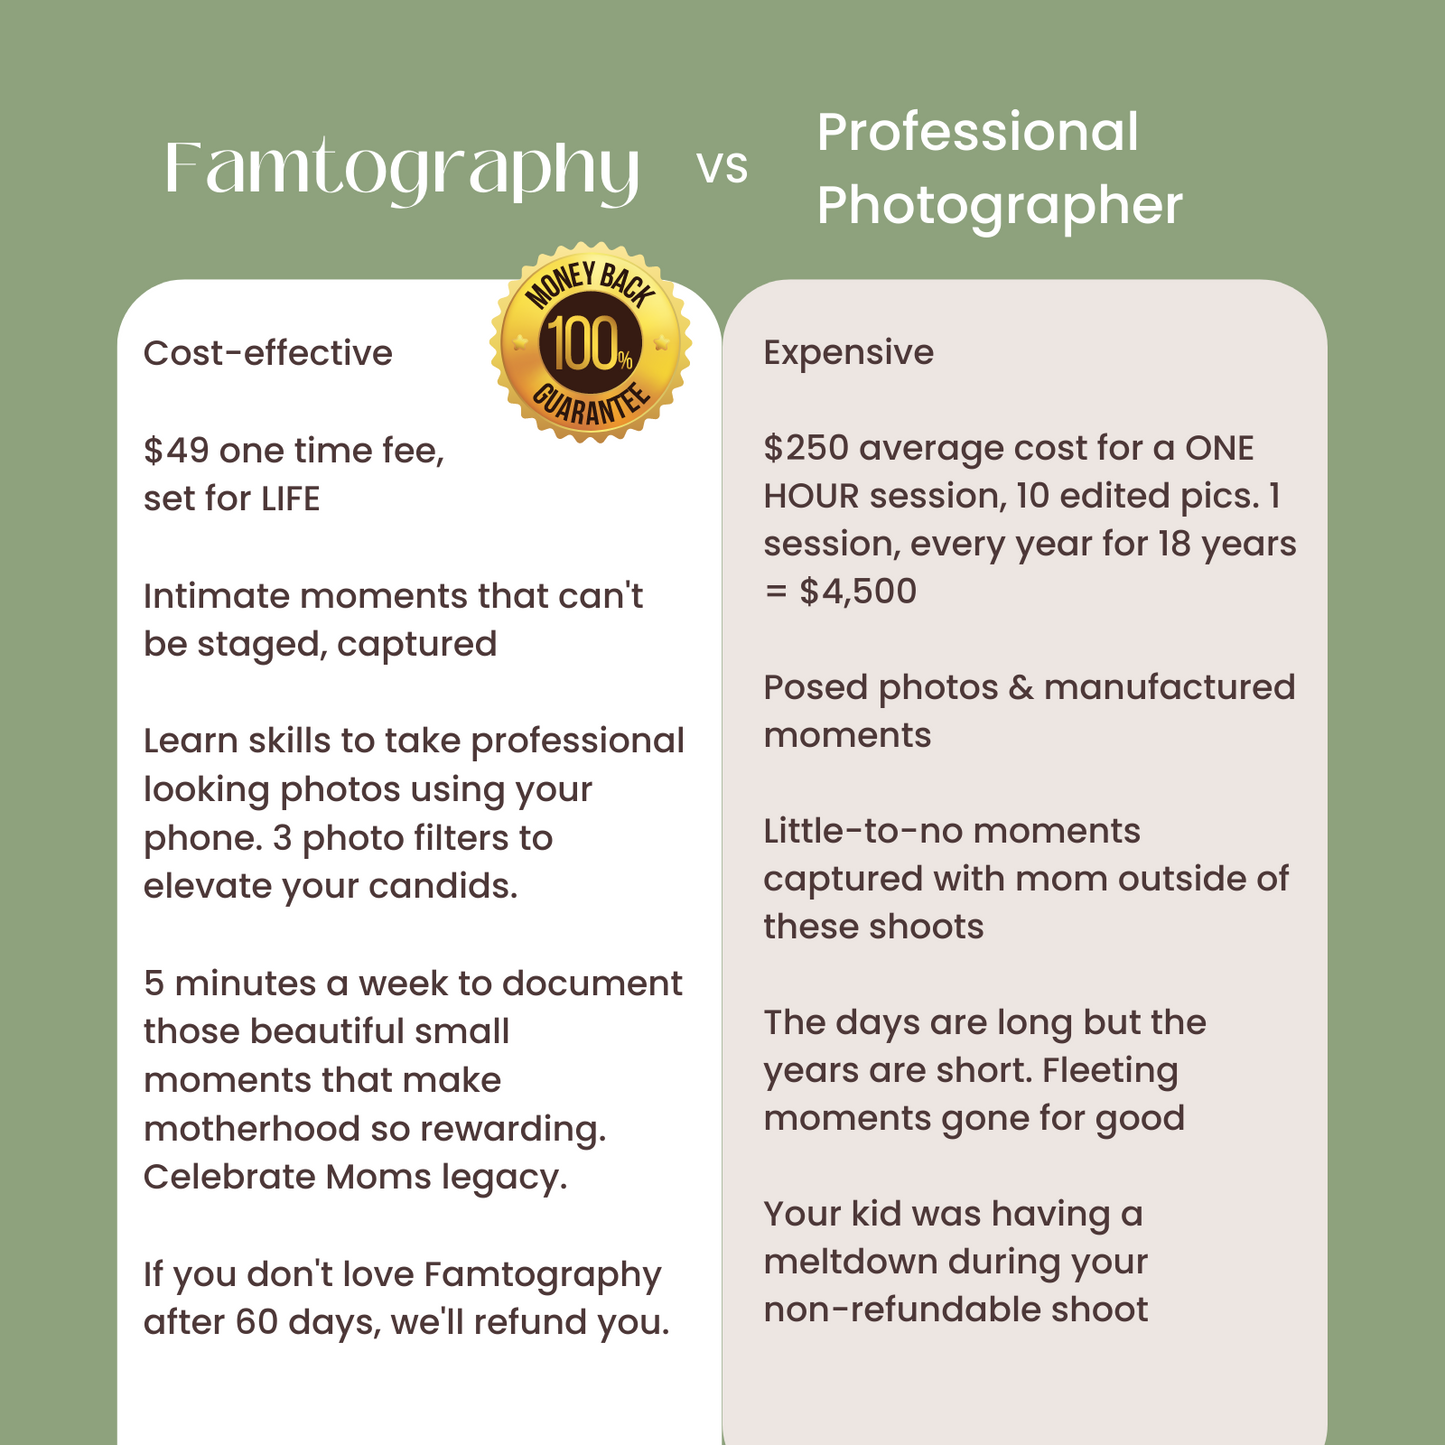 Famtography Prompts & Photo Guide Partner Bundle